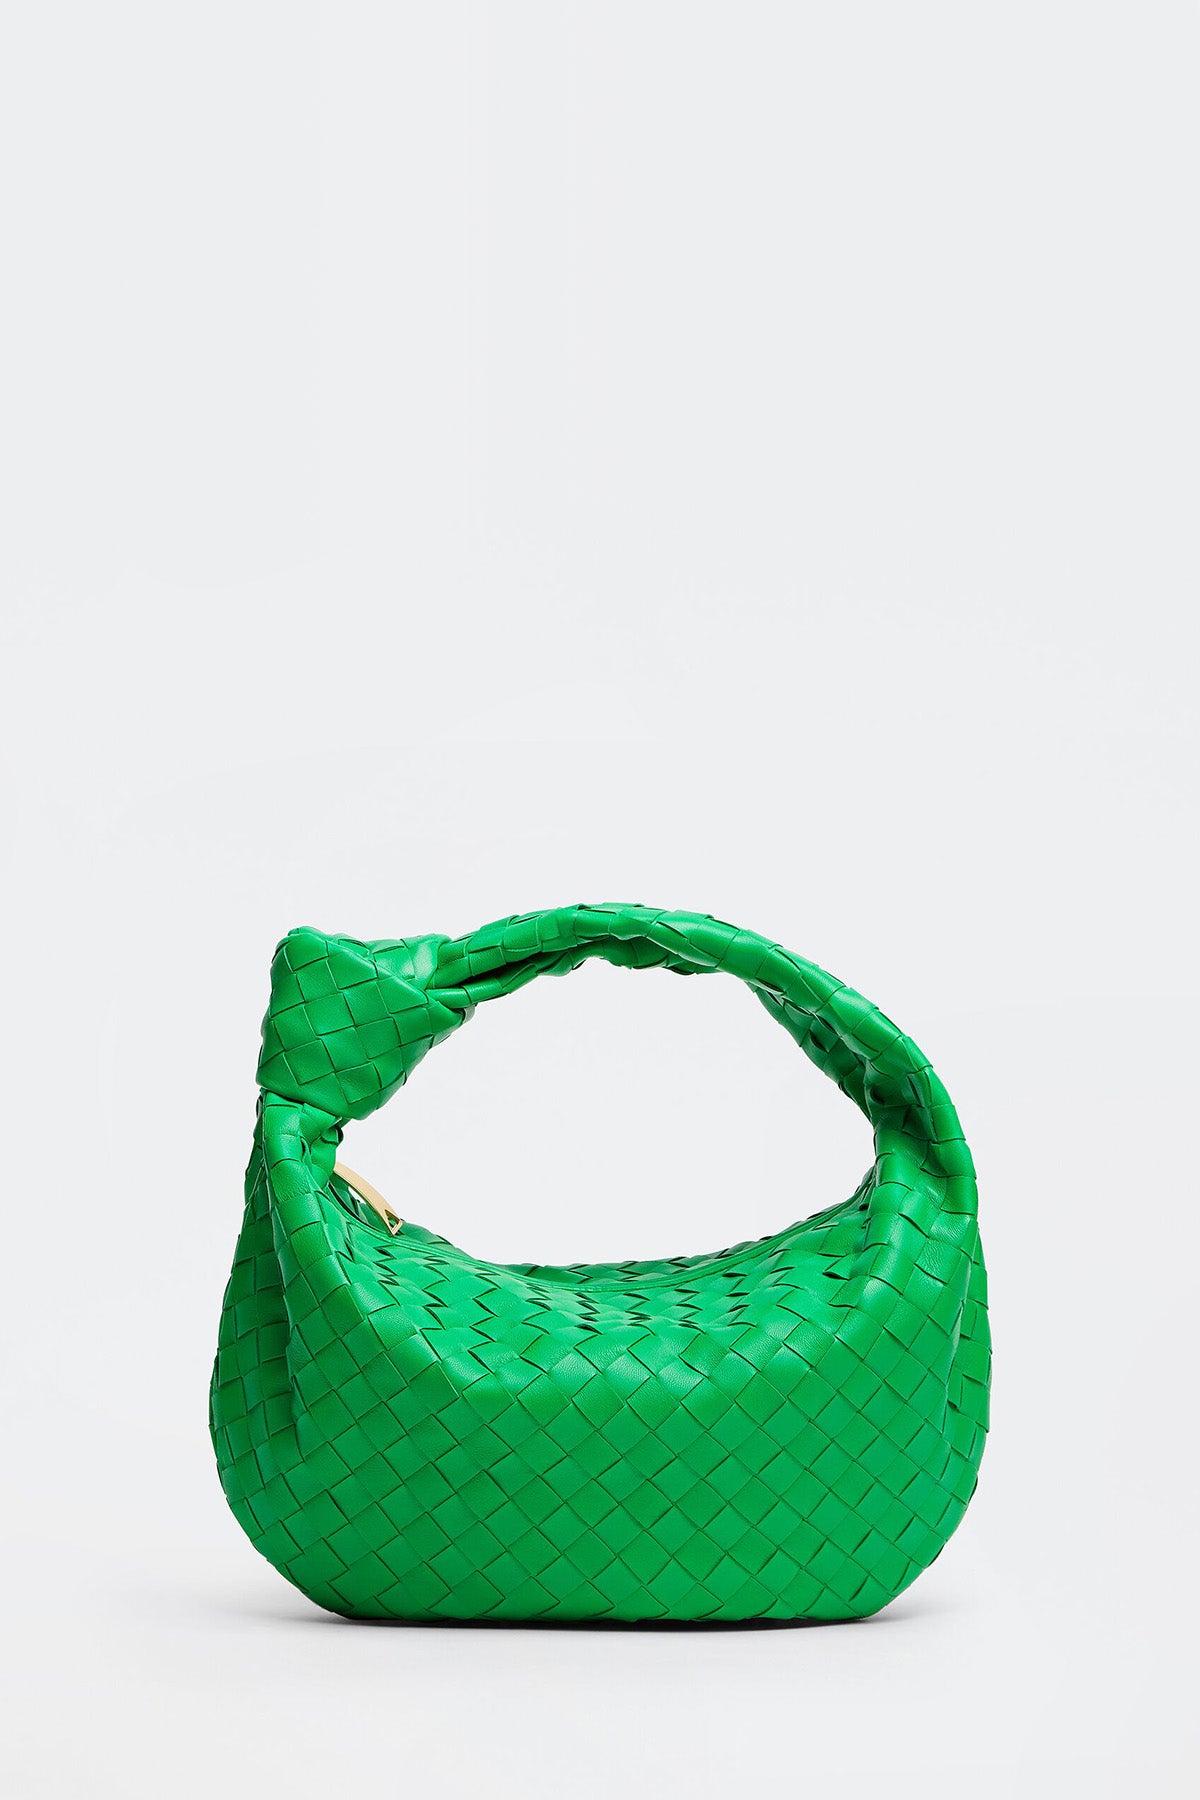 Pouch Teen Leather Clutch in Green - Bottega Veneta